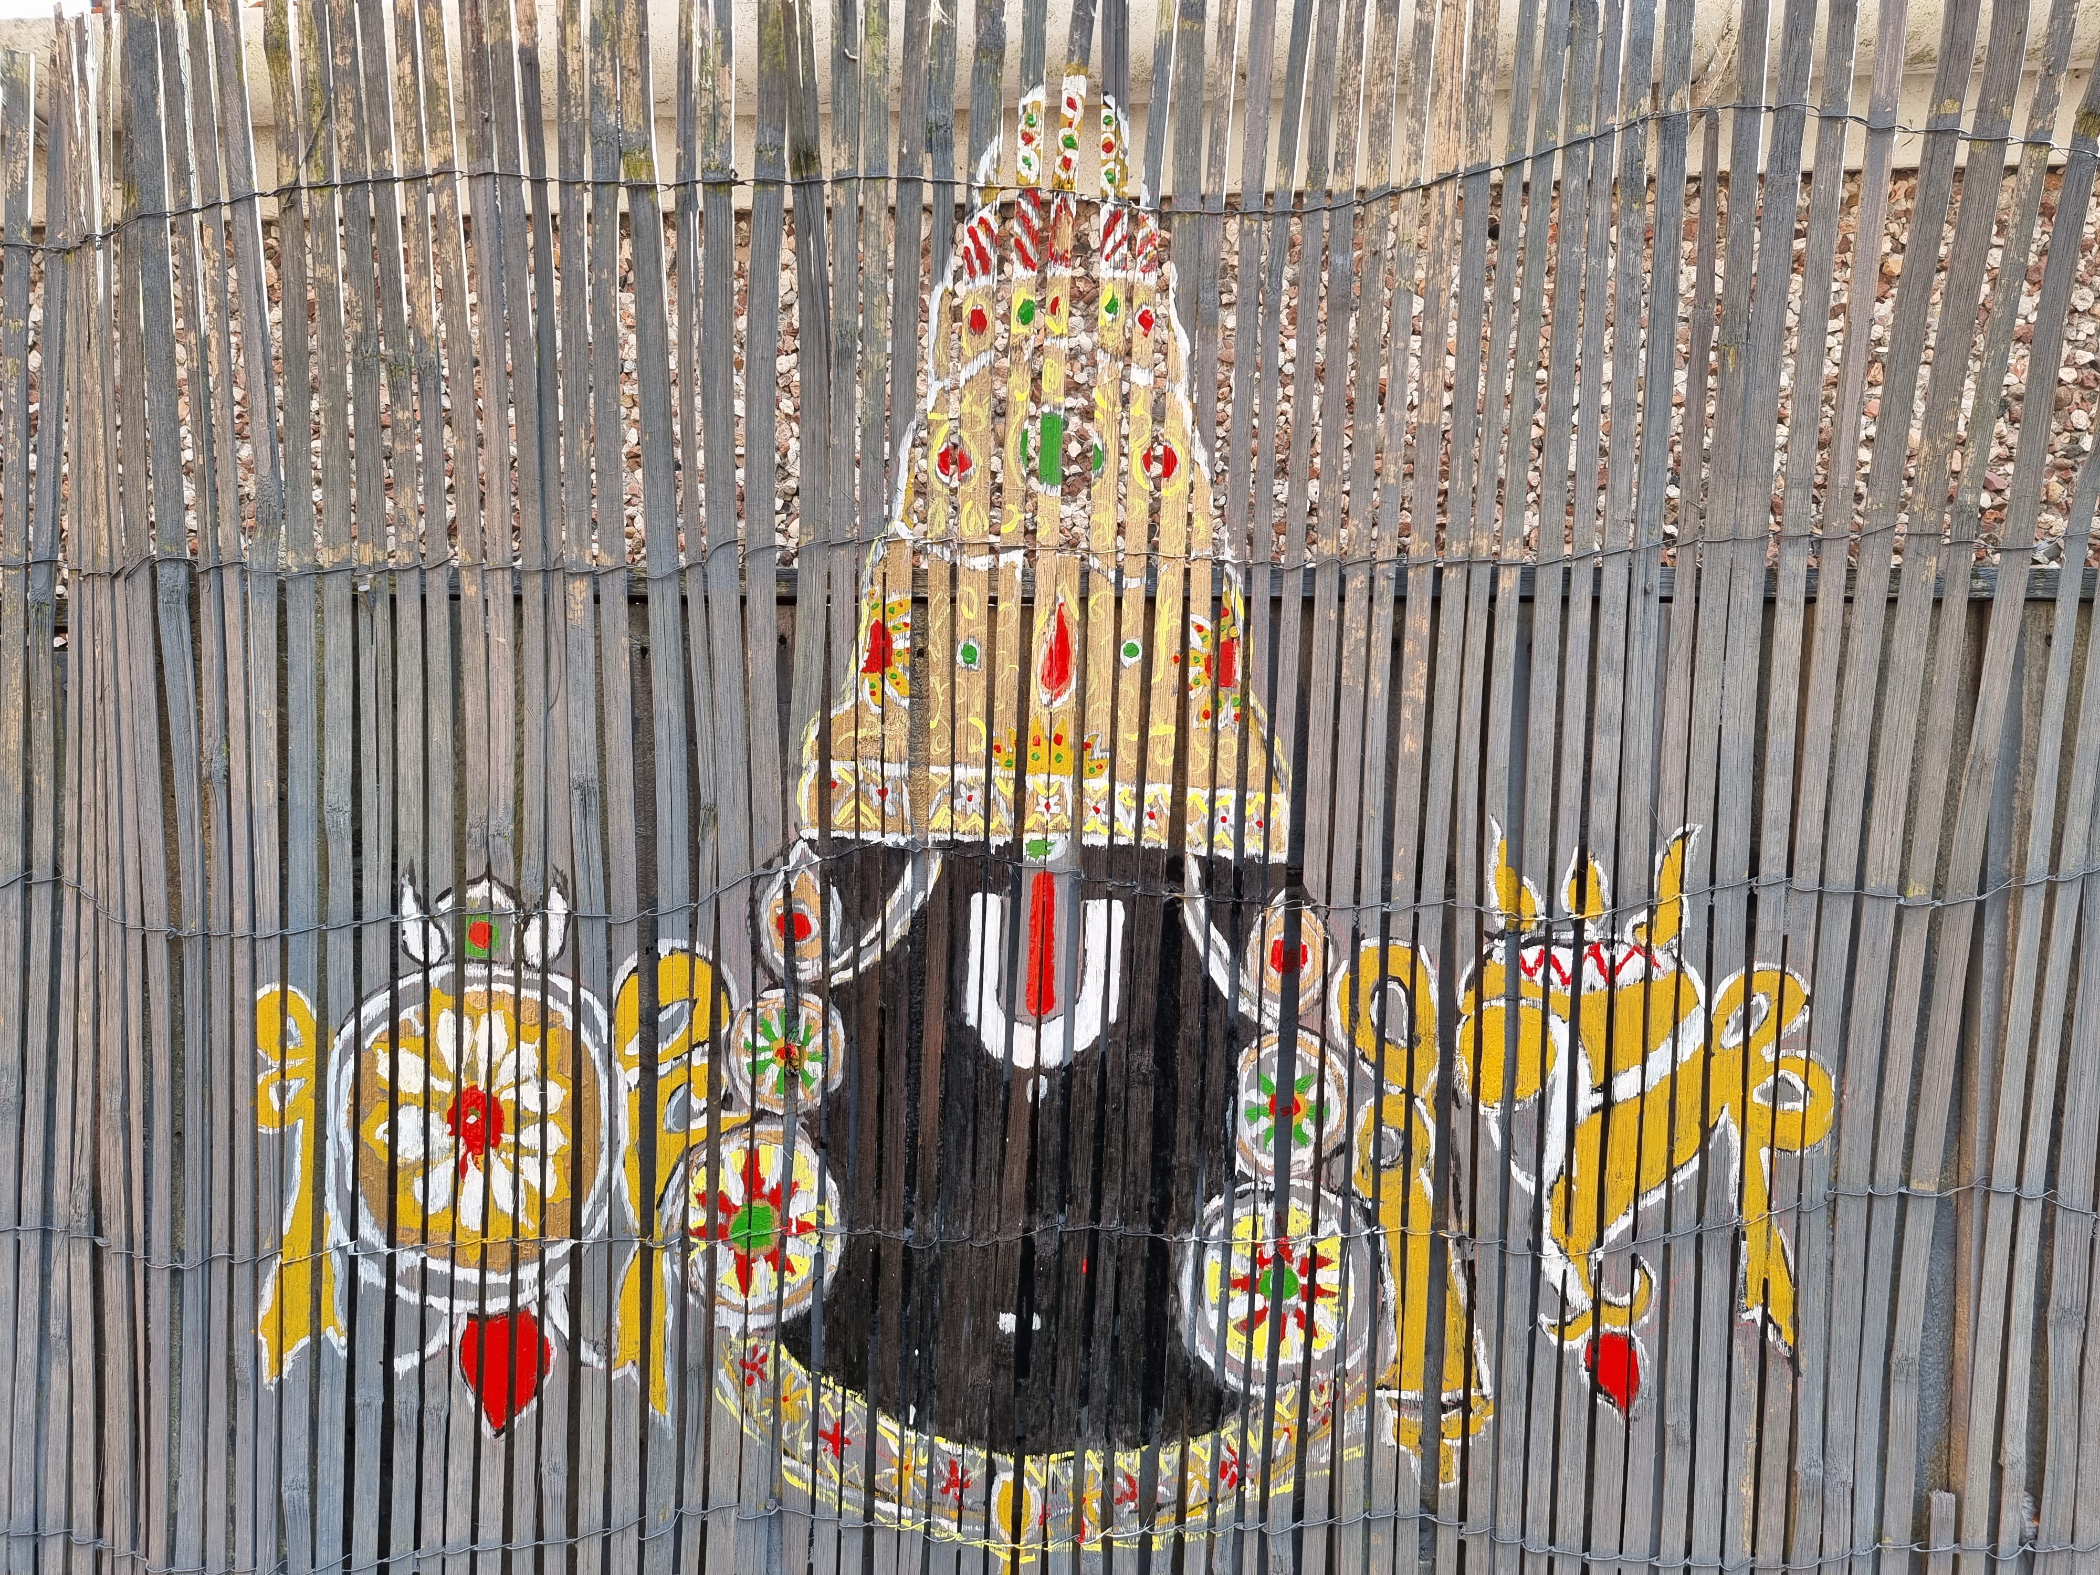 Painting on fence of Lord Balaji or Venkateshwara